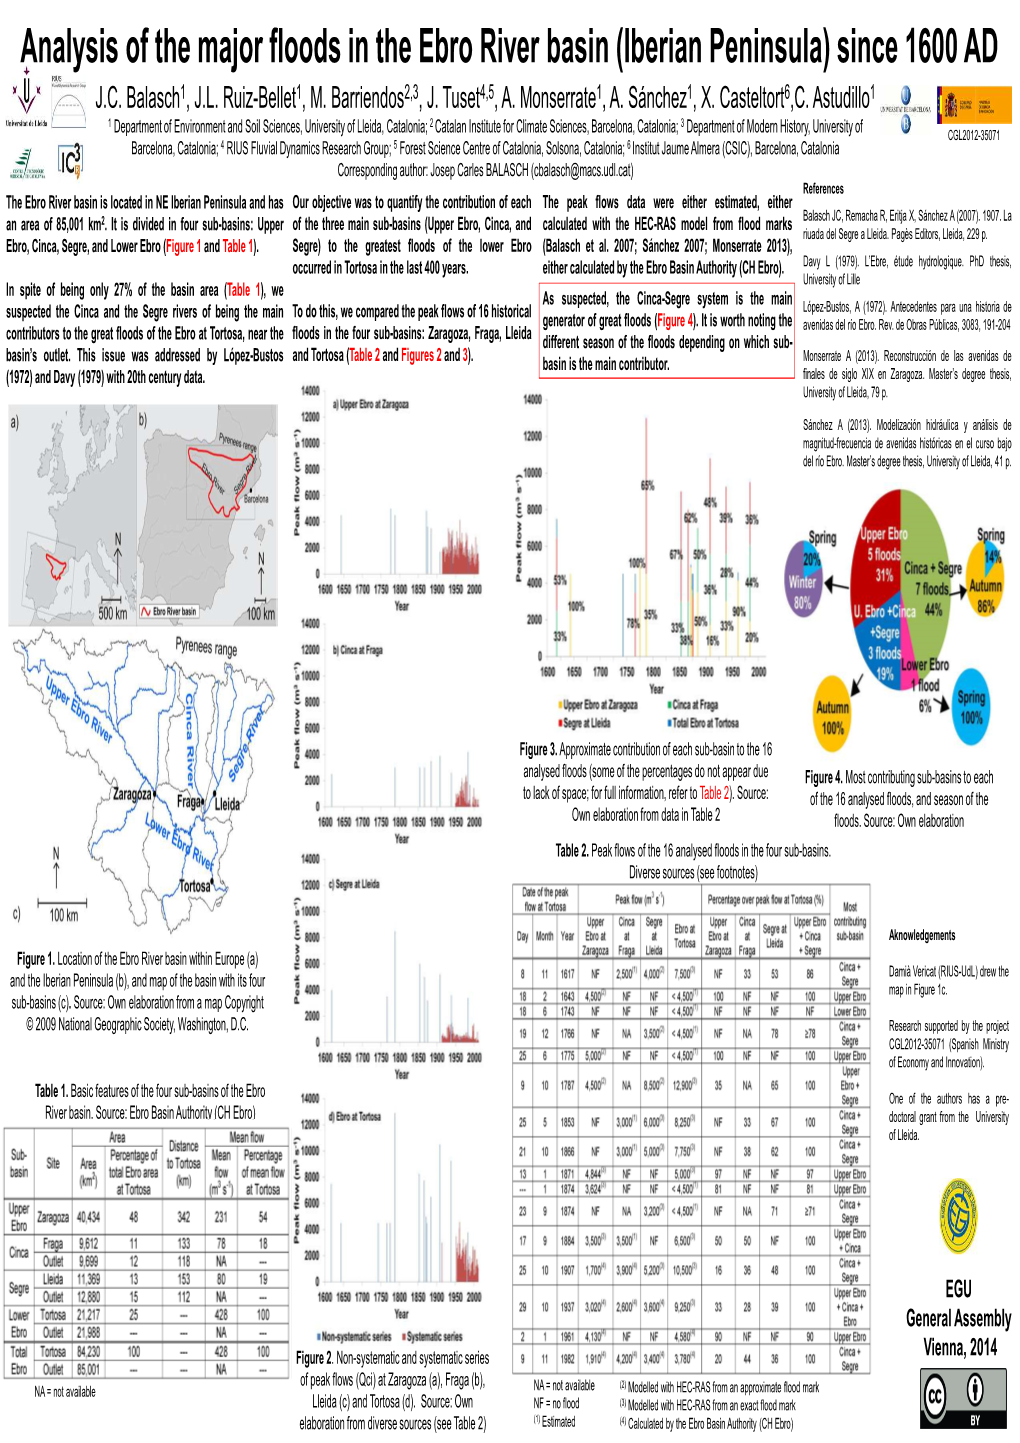 Analysis of the Major Floods in the Ebro River Basin (Iberian Peninsula) Since 1600 AD J.C